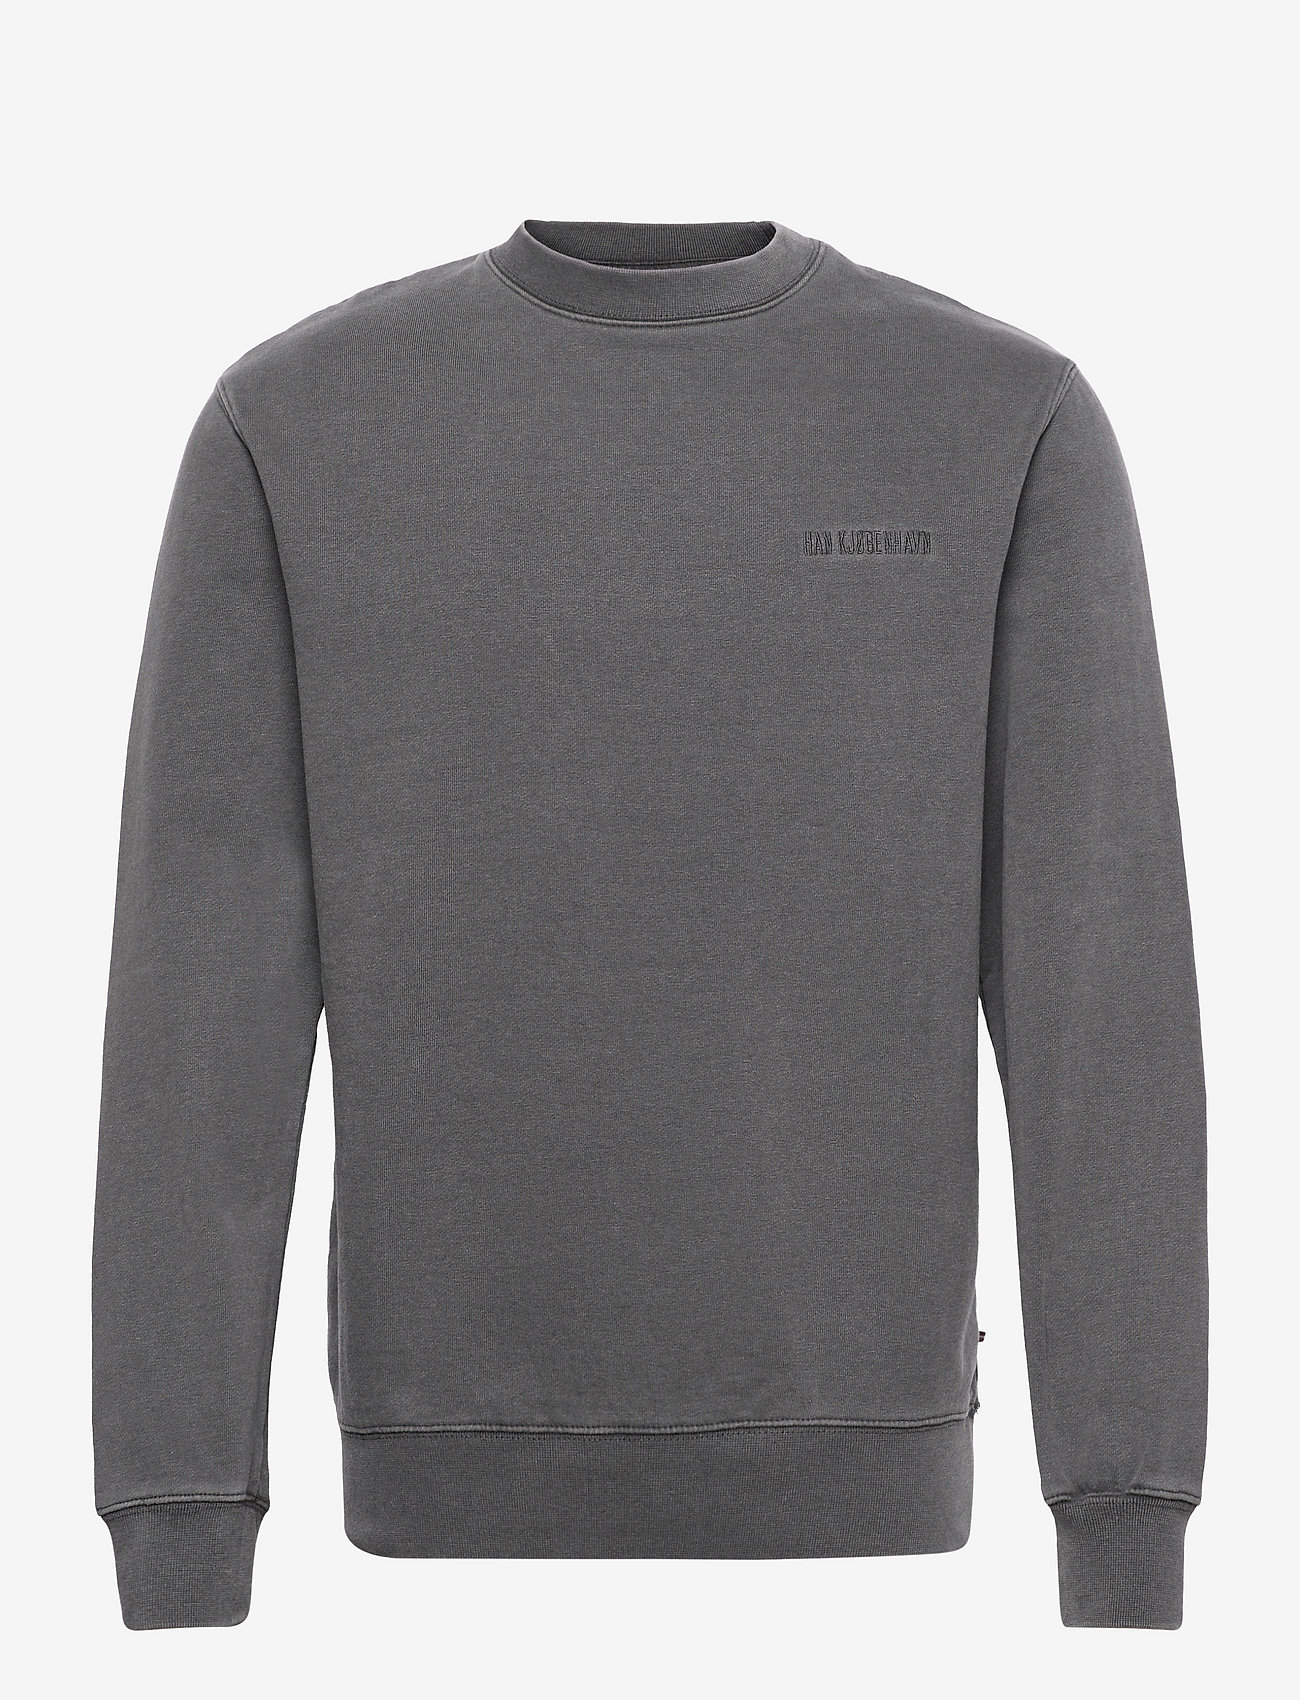 HAN Kjøbenhavn - Casual Crew - medvilniniai megztiniai - dark grey logo - 0